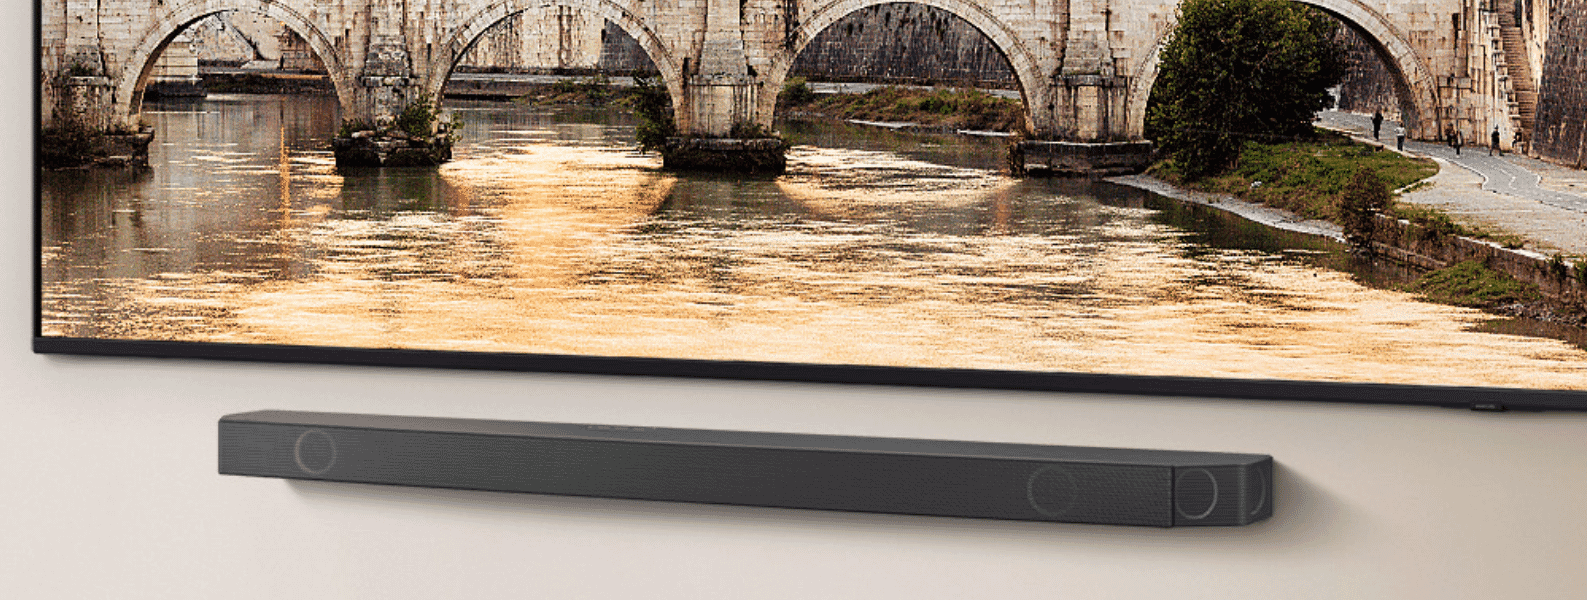 SAMSUNG QLED 4K SMART TVS | The Good Guys